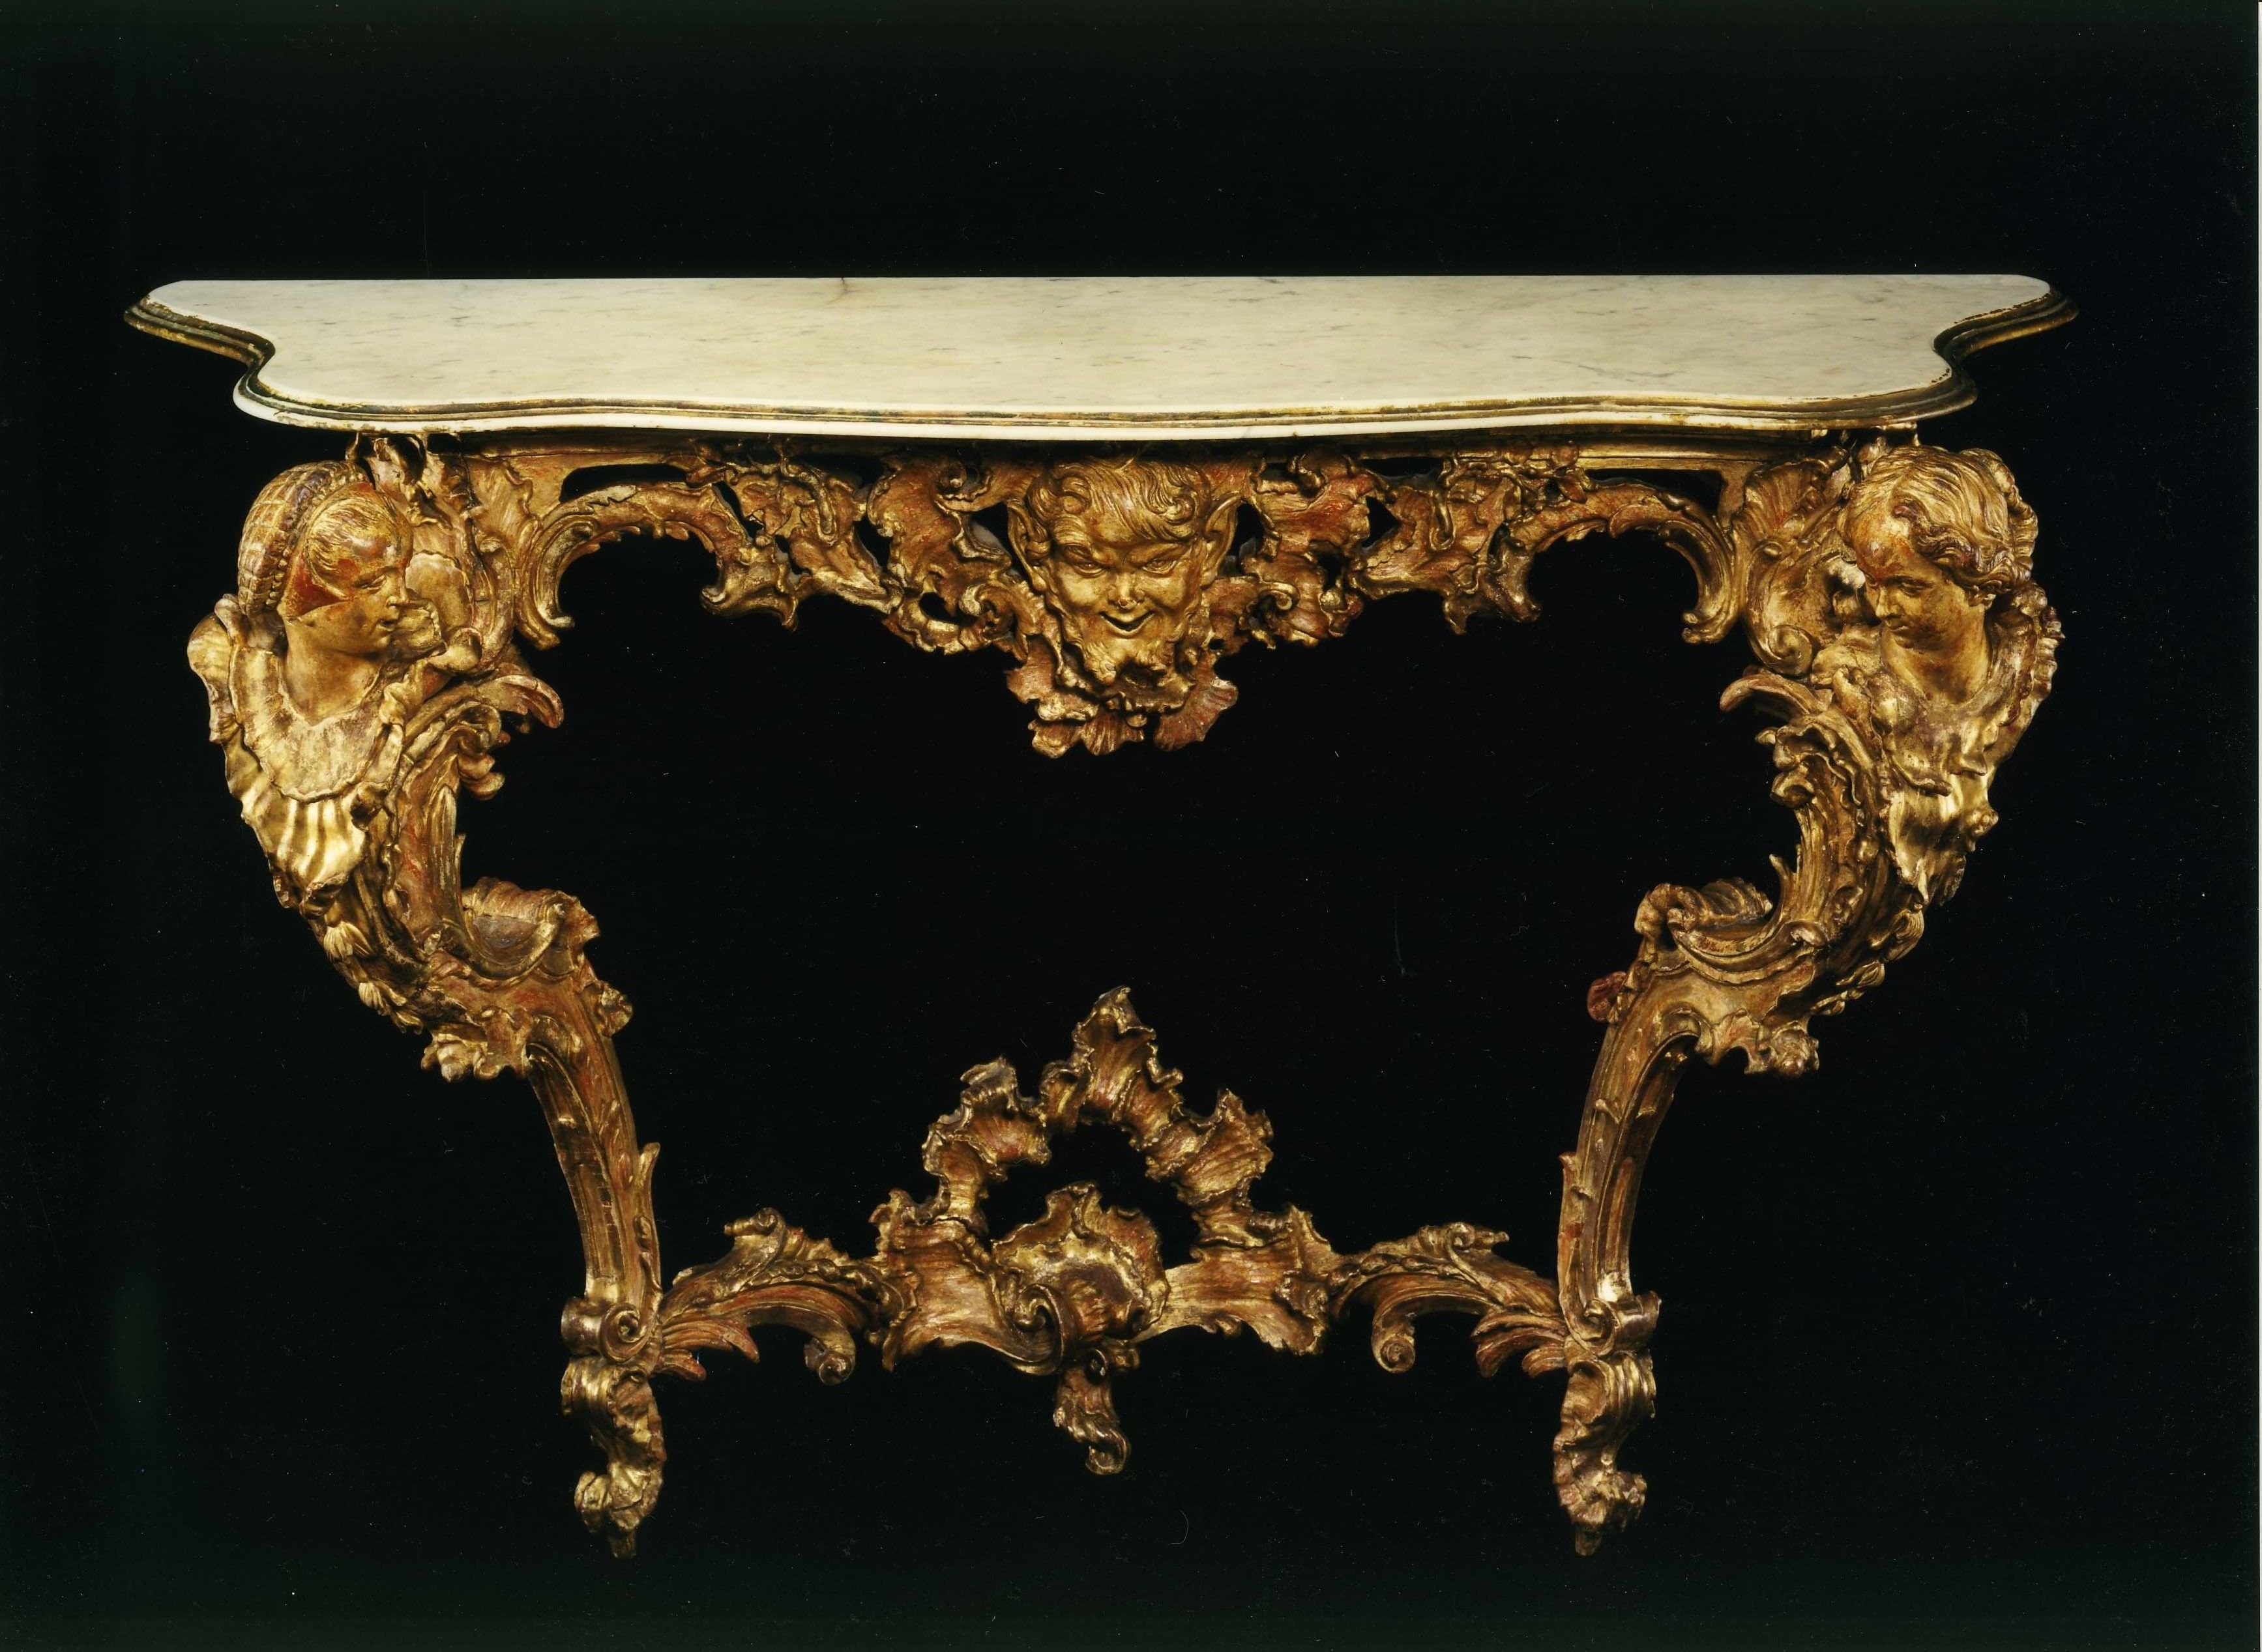 Мебель 17 века. Мебель эпохи рококо 18 век. Мебель Барокко 17 век. Мебель эпохи Барокко в Италии 17 век. Мебель рококо Барокко Ампир.